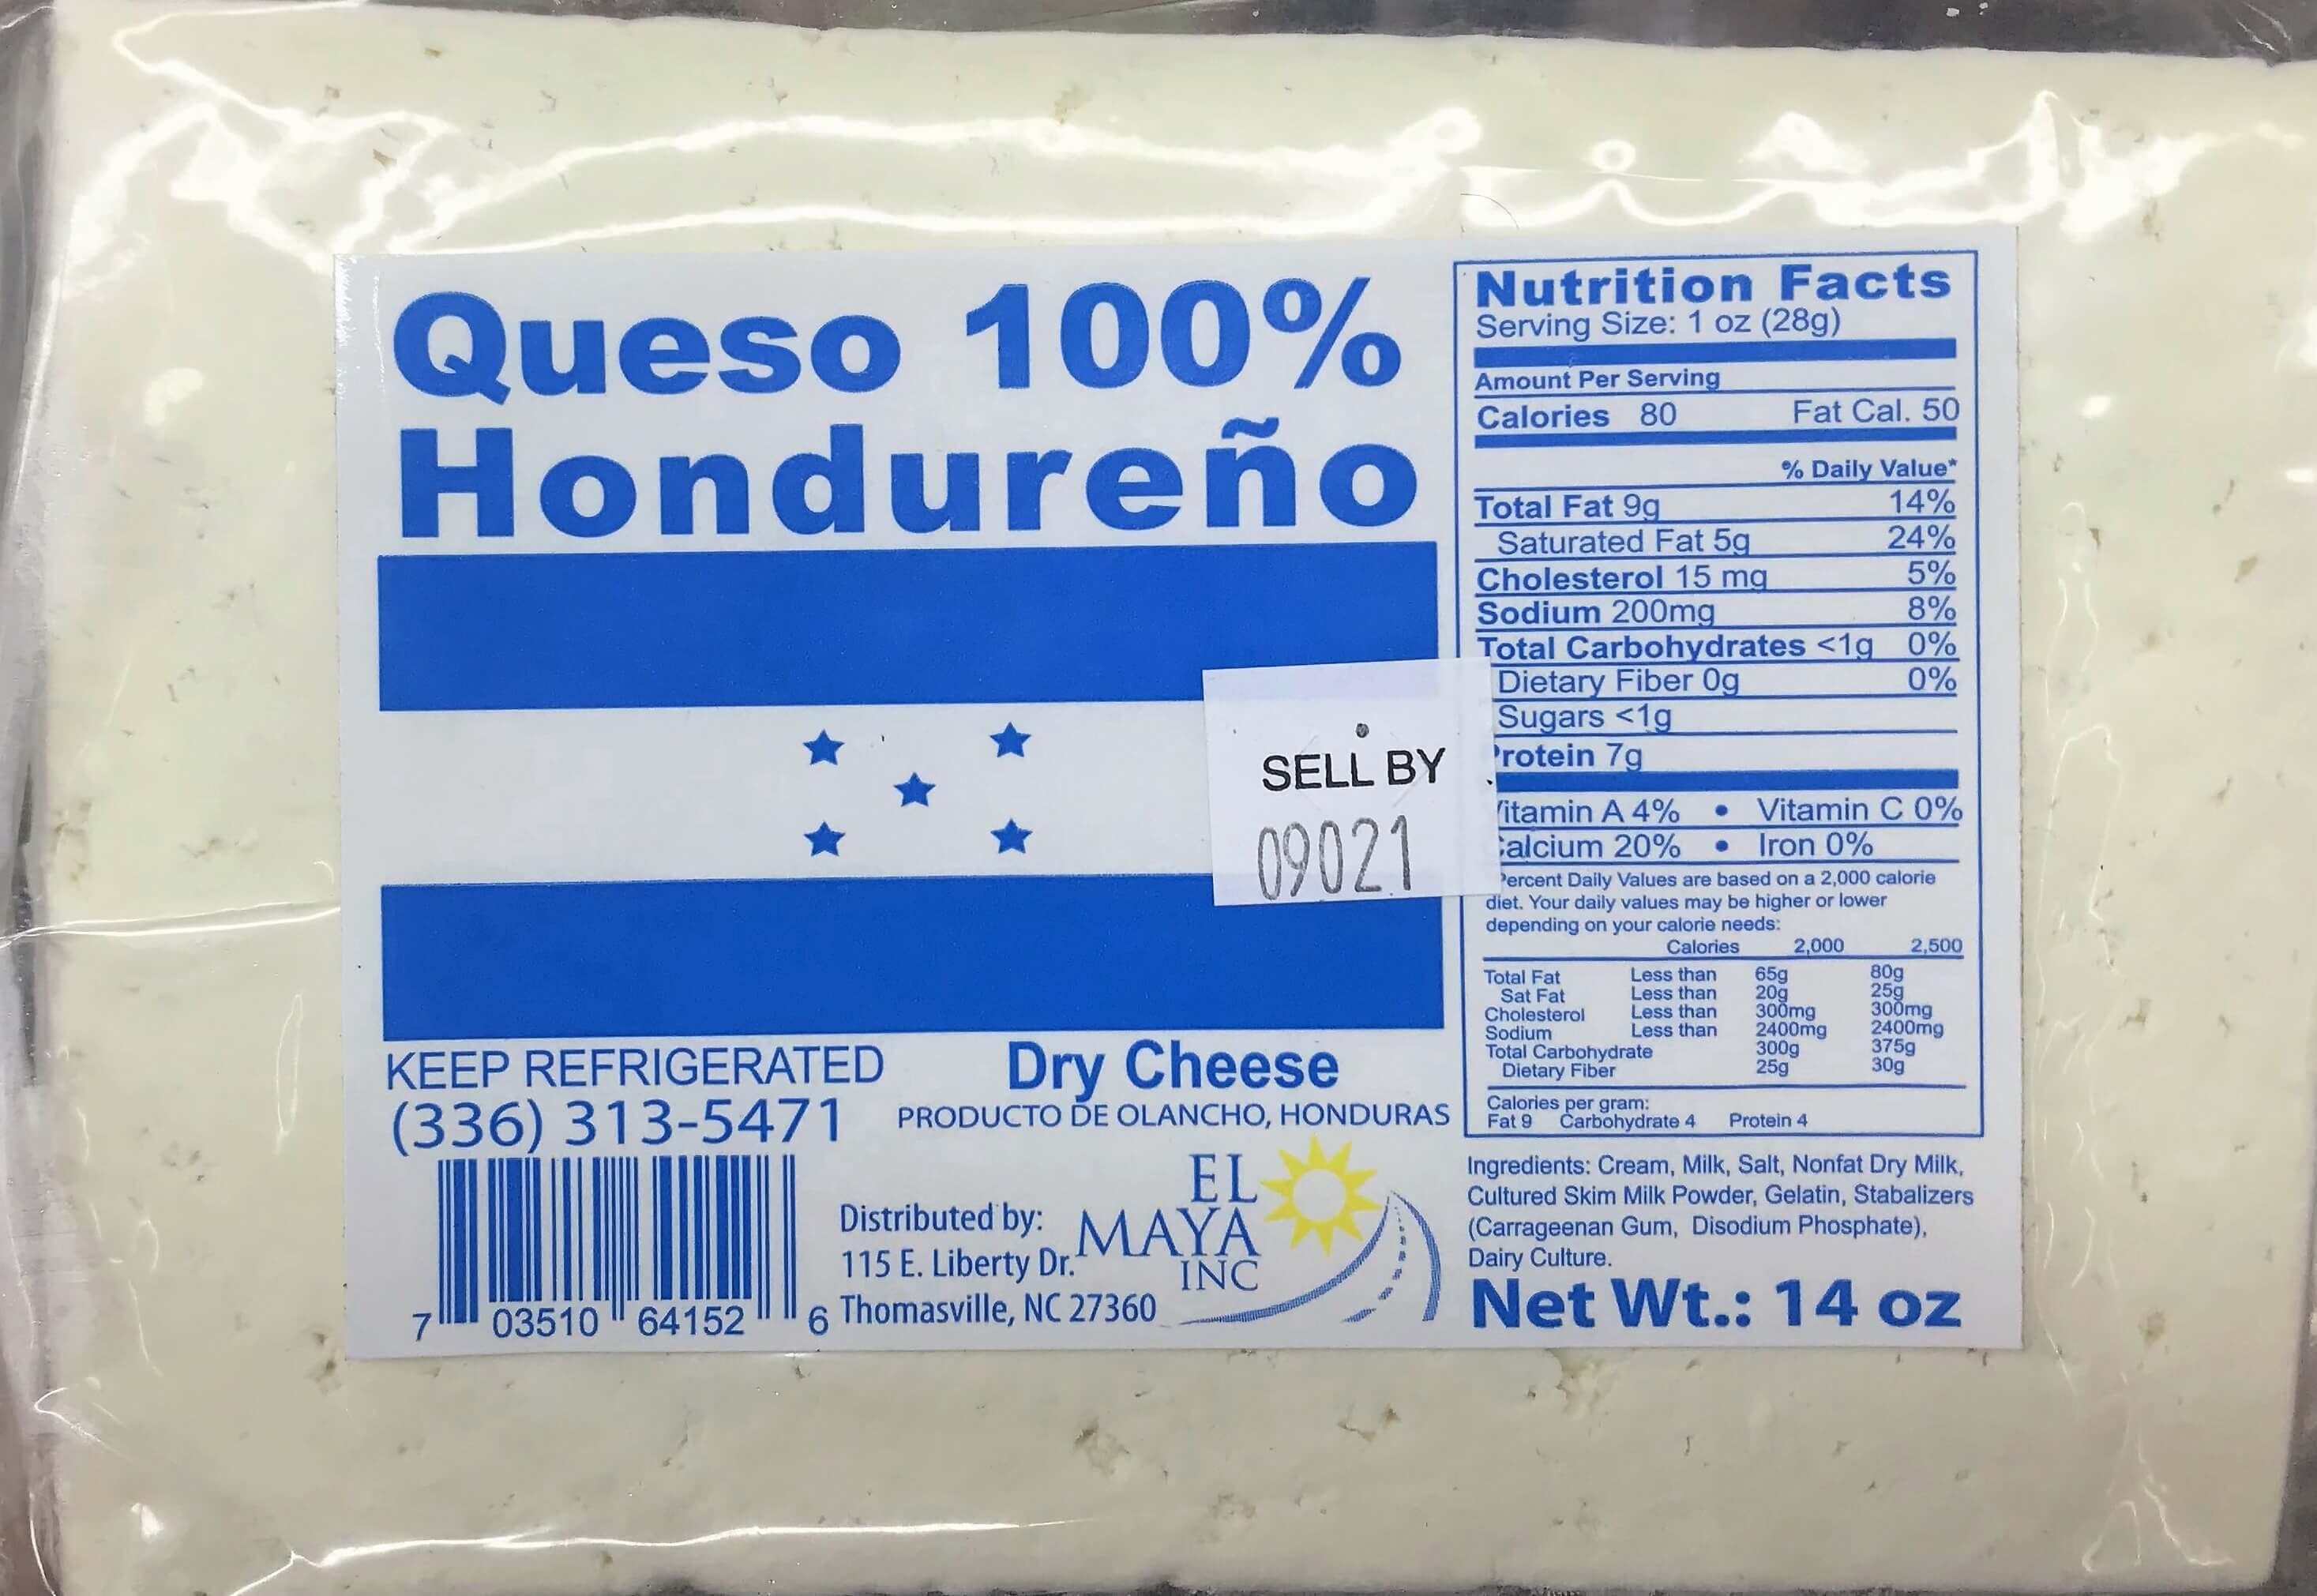 El Maya Inc - Dry Cheese Hondureño 14oz.